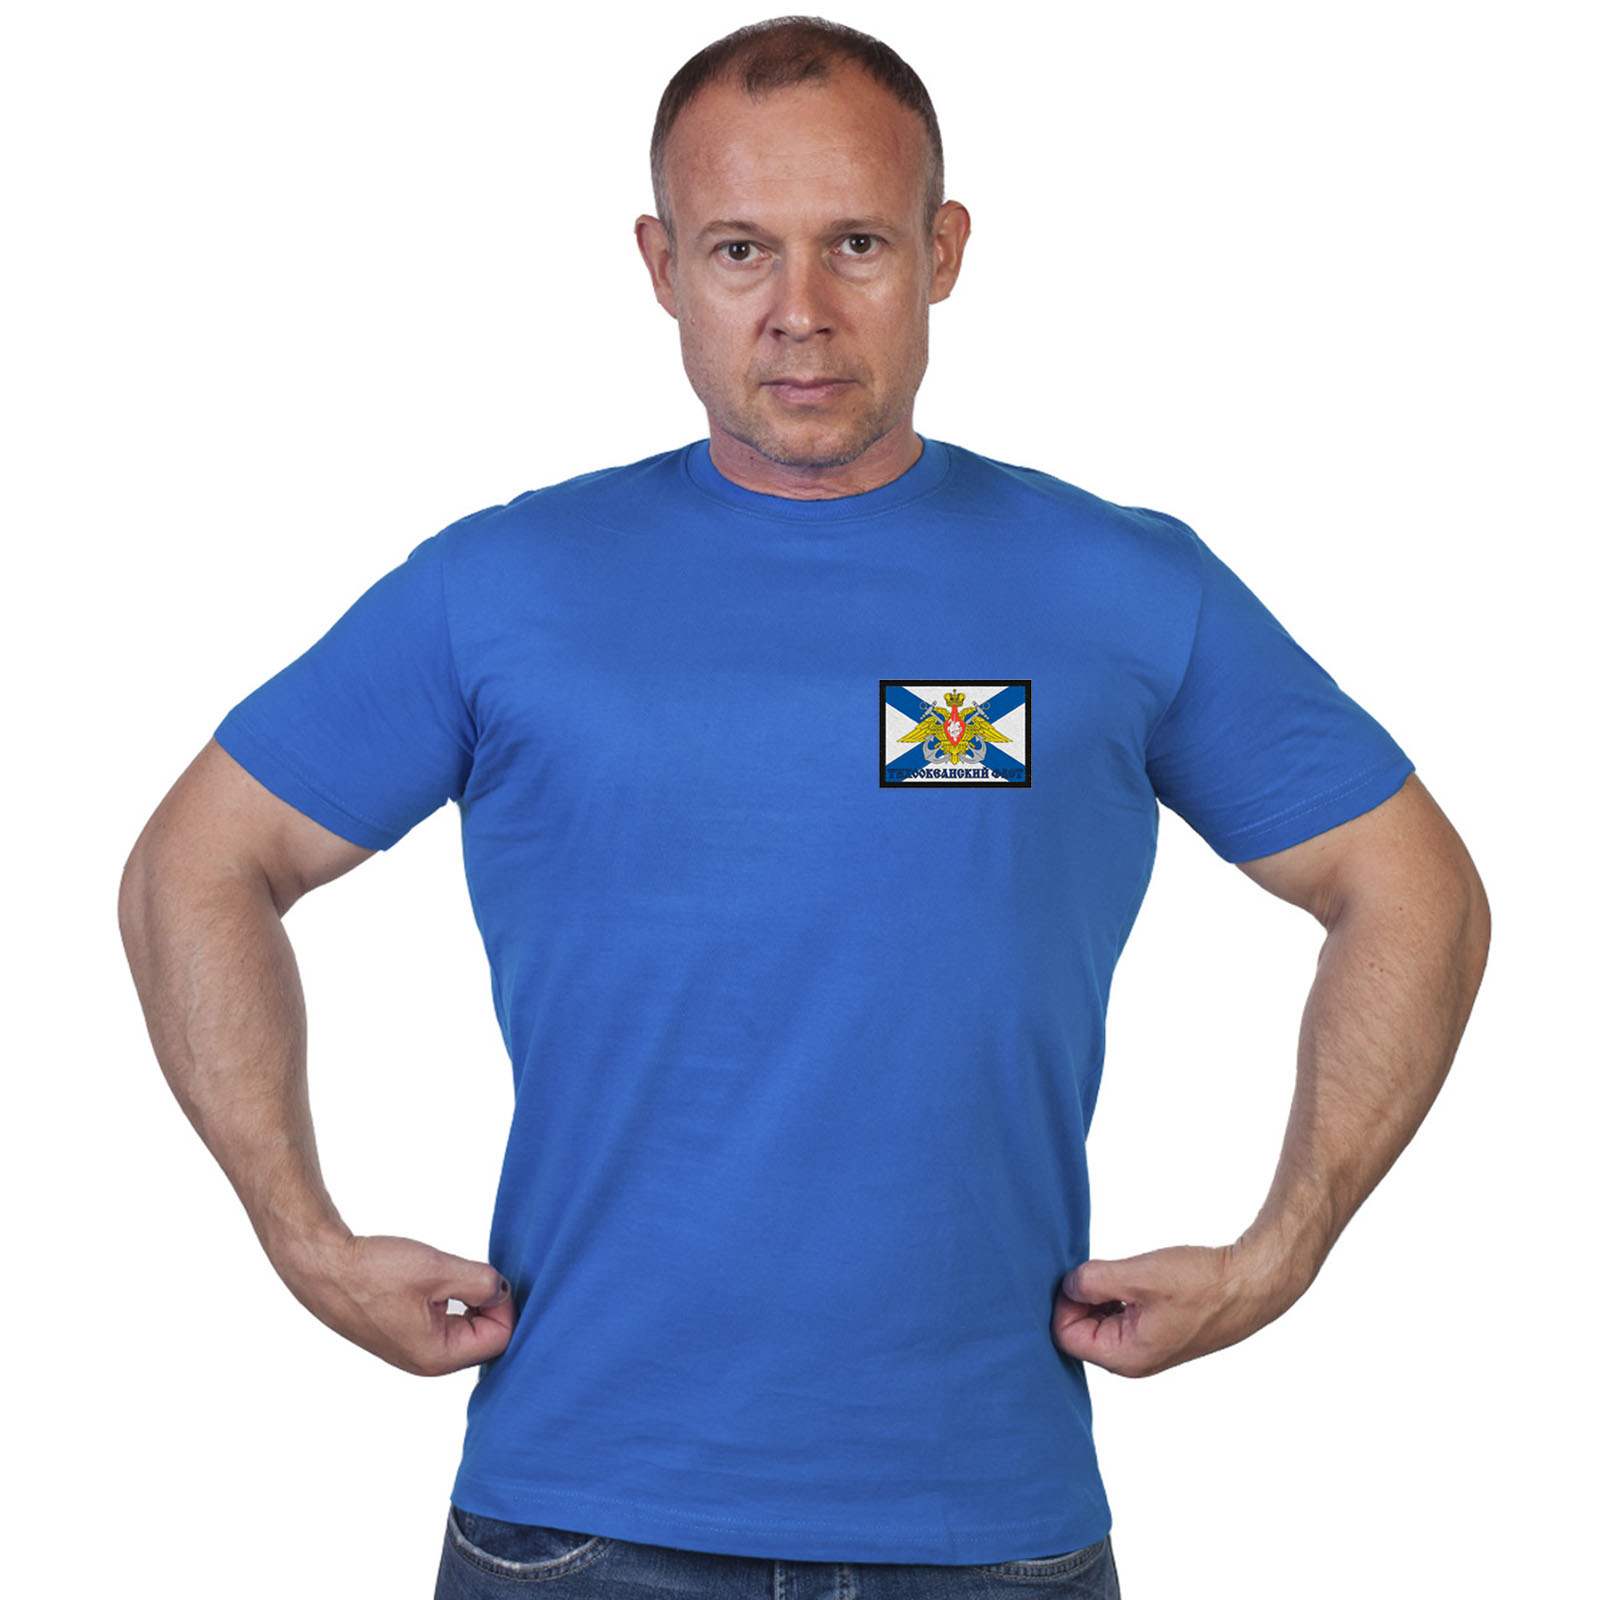 Васильковая футболка с шевроном Тихоокеанского флота РФ